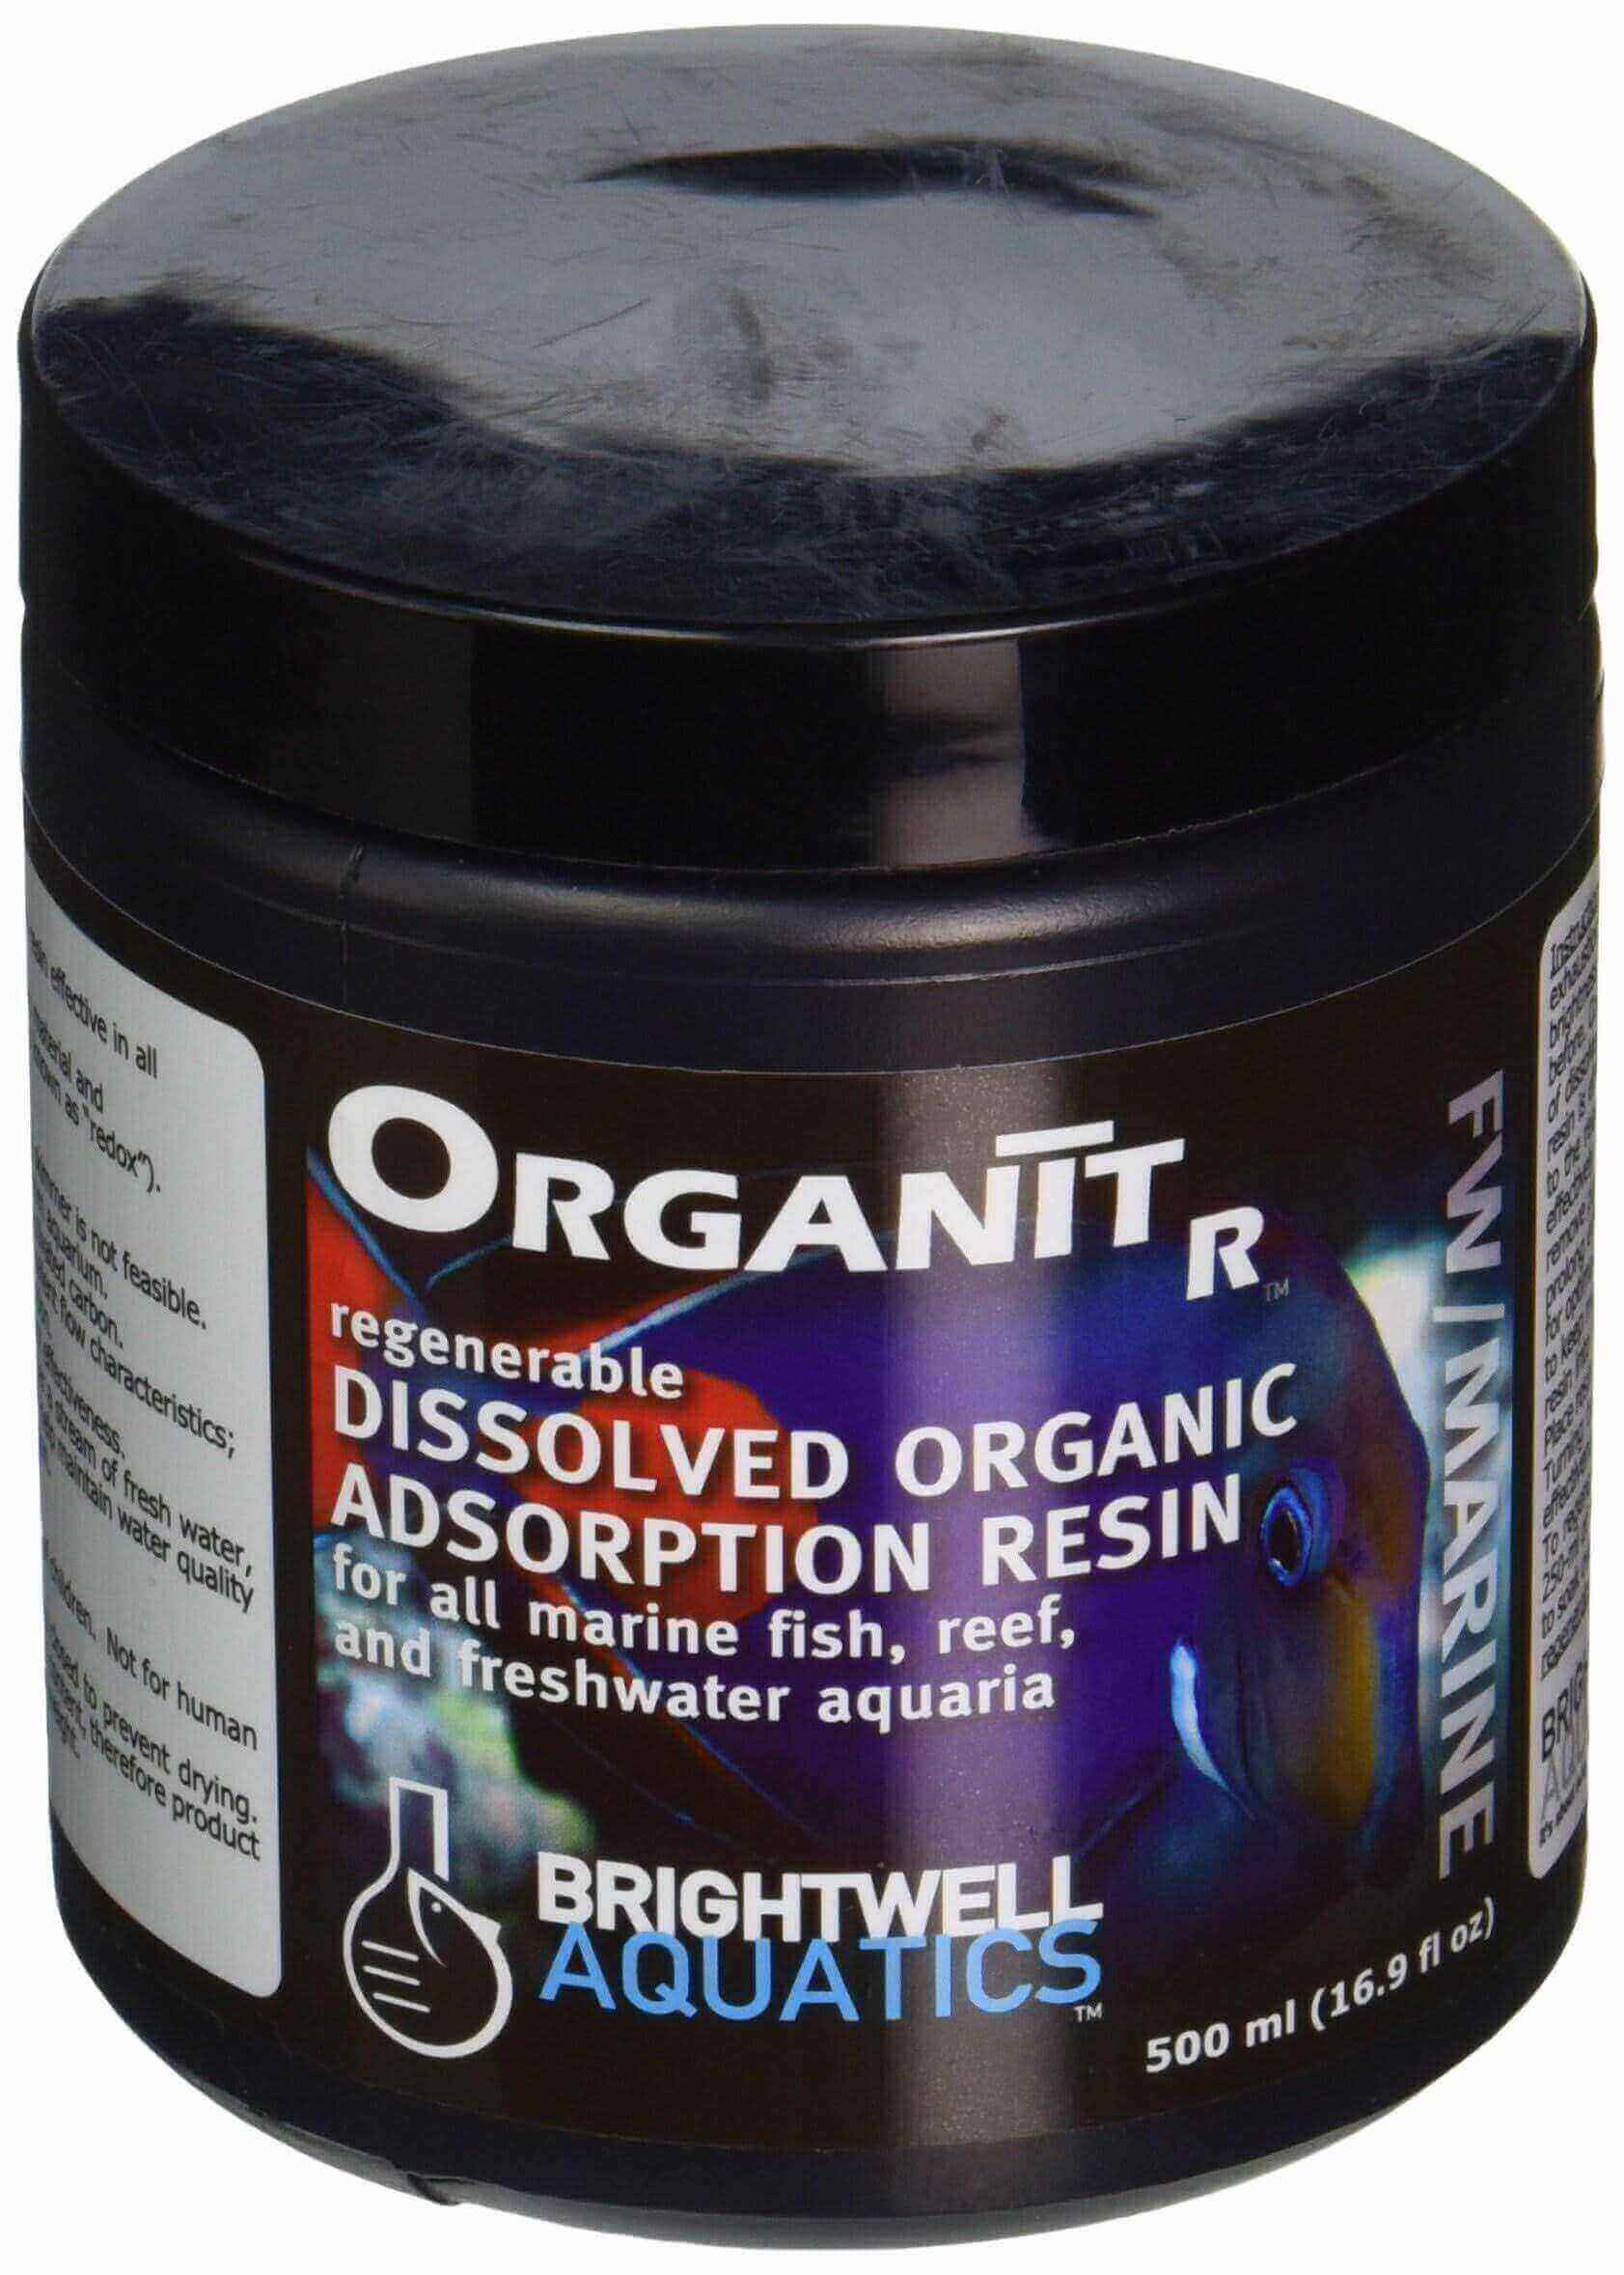 Brightwell Aquatics OrganitR Dissolved Organic Adsorption Resin 500ml